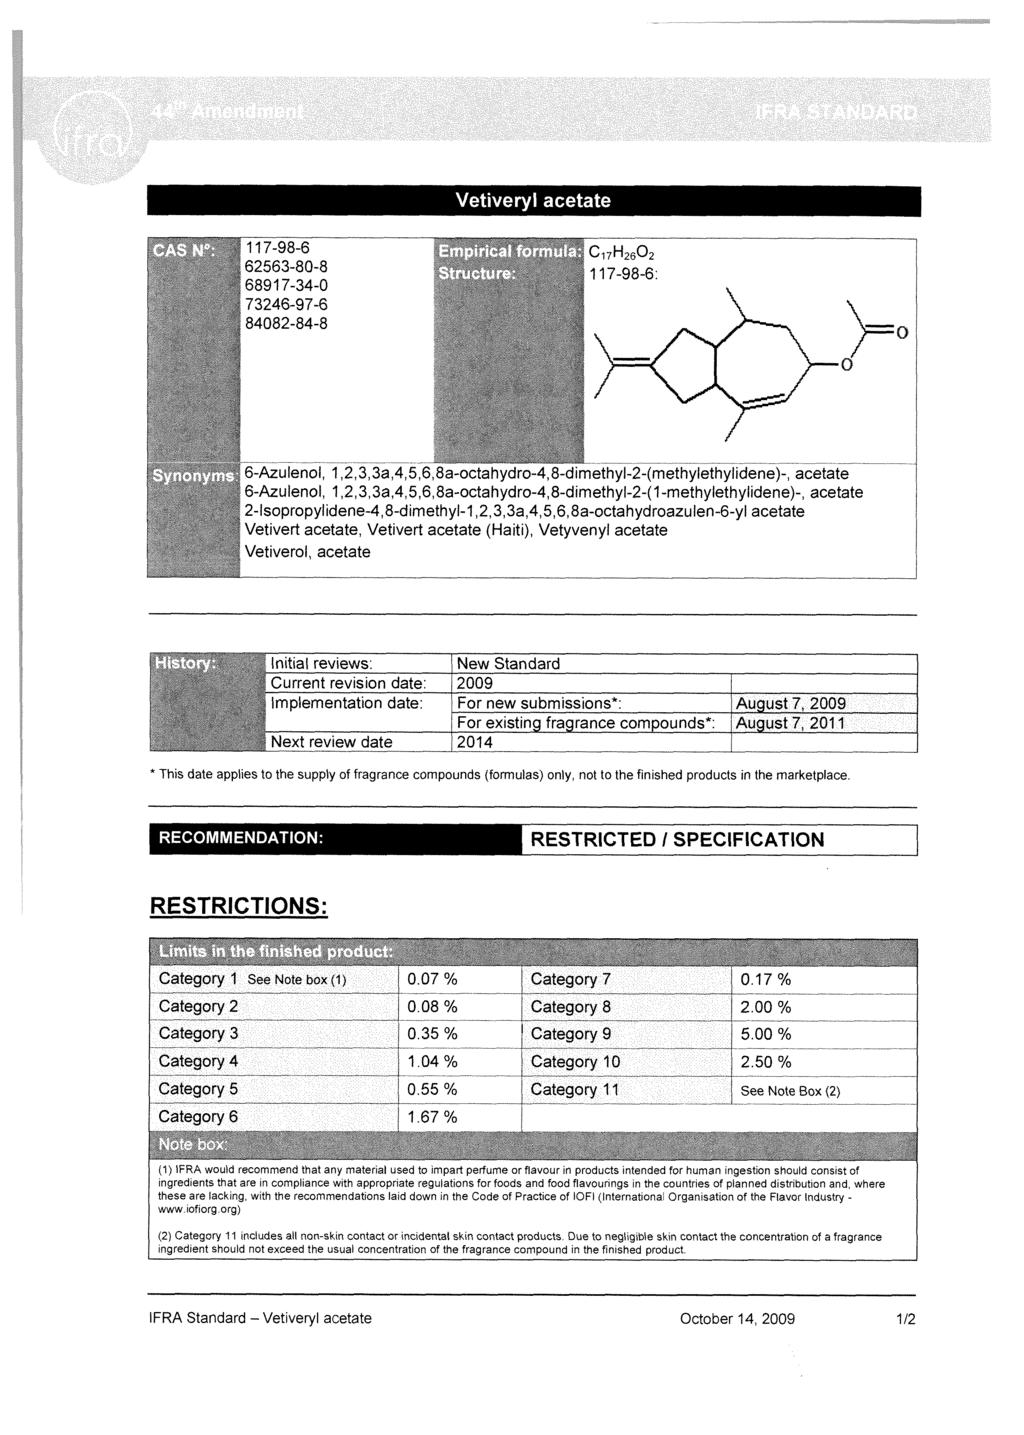 Vetiveryl acetate 117-98-6 (62563-80-8 168917-34-0 Į 73246-97-6 I 84082-84-8 Į 6-Azulenol, 1,2,3,33,4,5,6,8a-octahydiO-4,8-dìmethyl-2-(methylethylidene)-, acetate 6-Azulenol, I.Ž.S.SaAS.e.Sa-octahydrcMl.